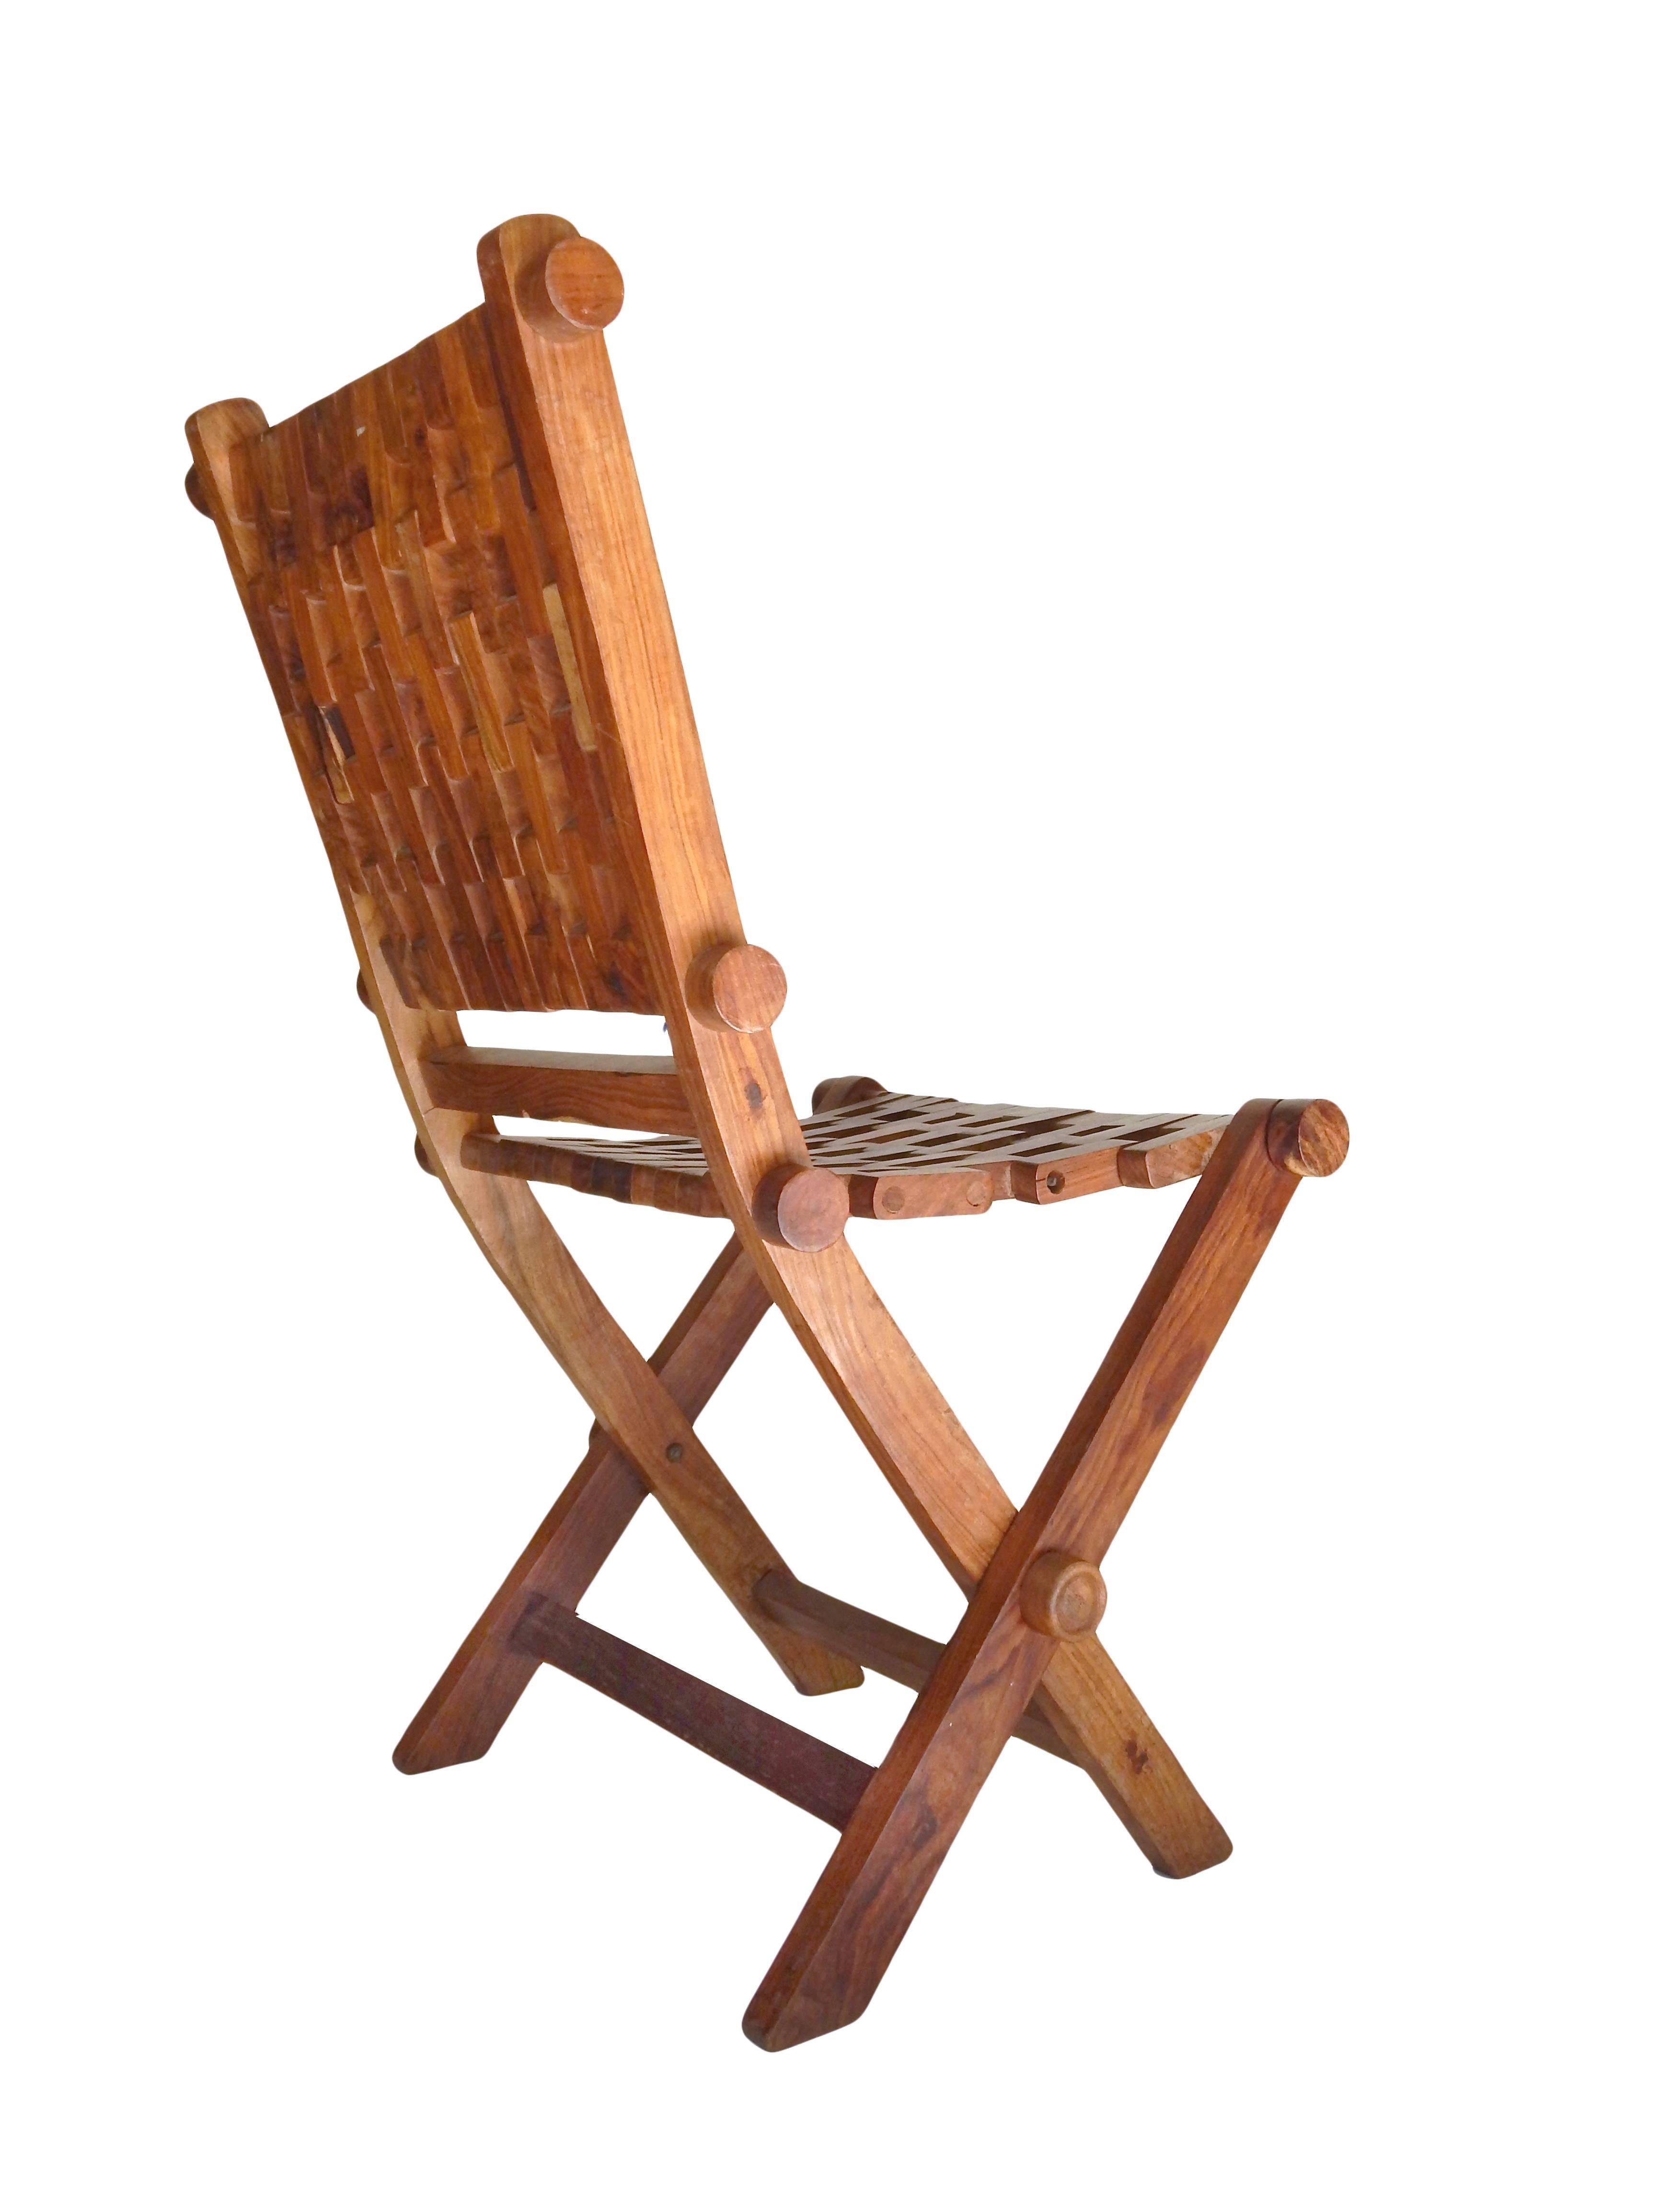 20th Century Great Pair of Handmade Folding Chairs